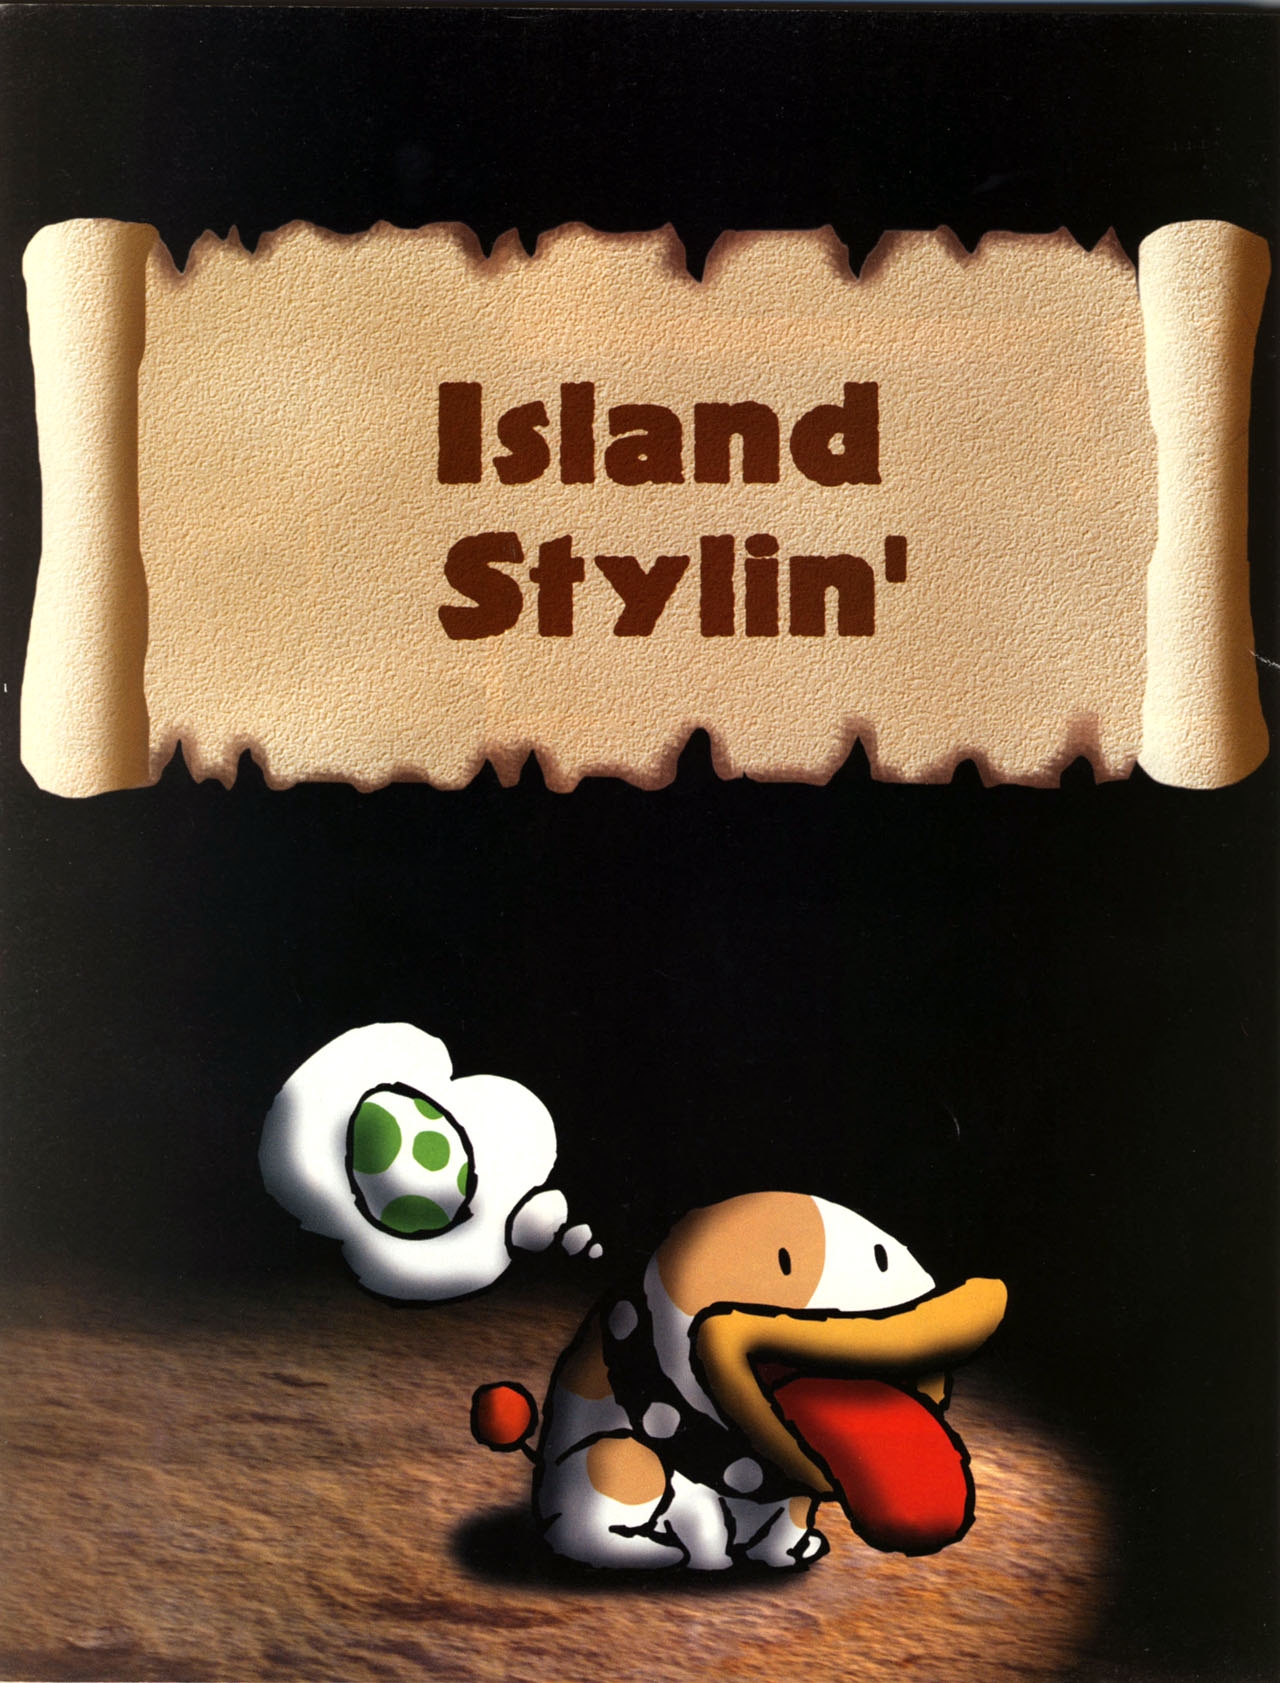 Nintendo Players Guide (SNES) - Super Mario World 2 - Yoshis Island (1995) 63